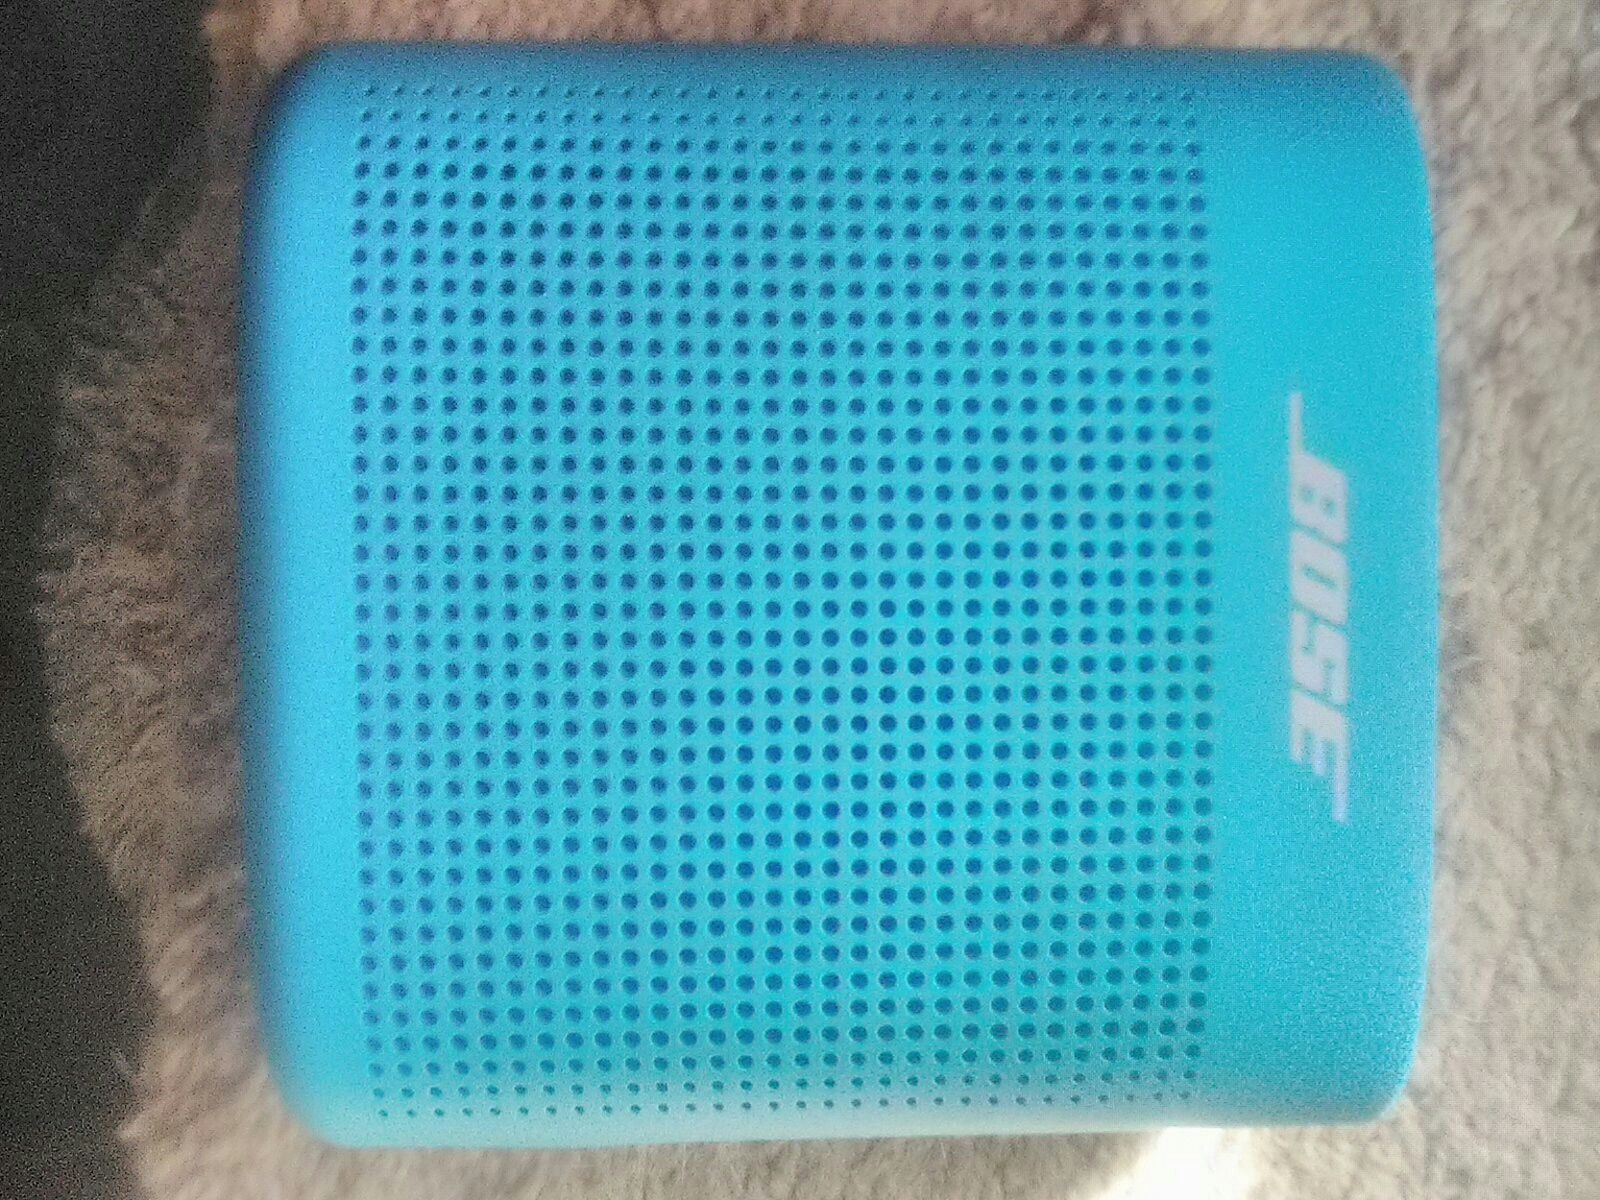 $40 Bose Bluetooth speaker